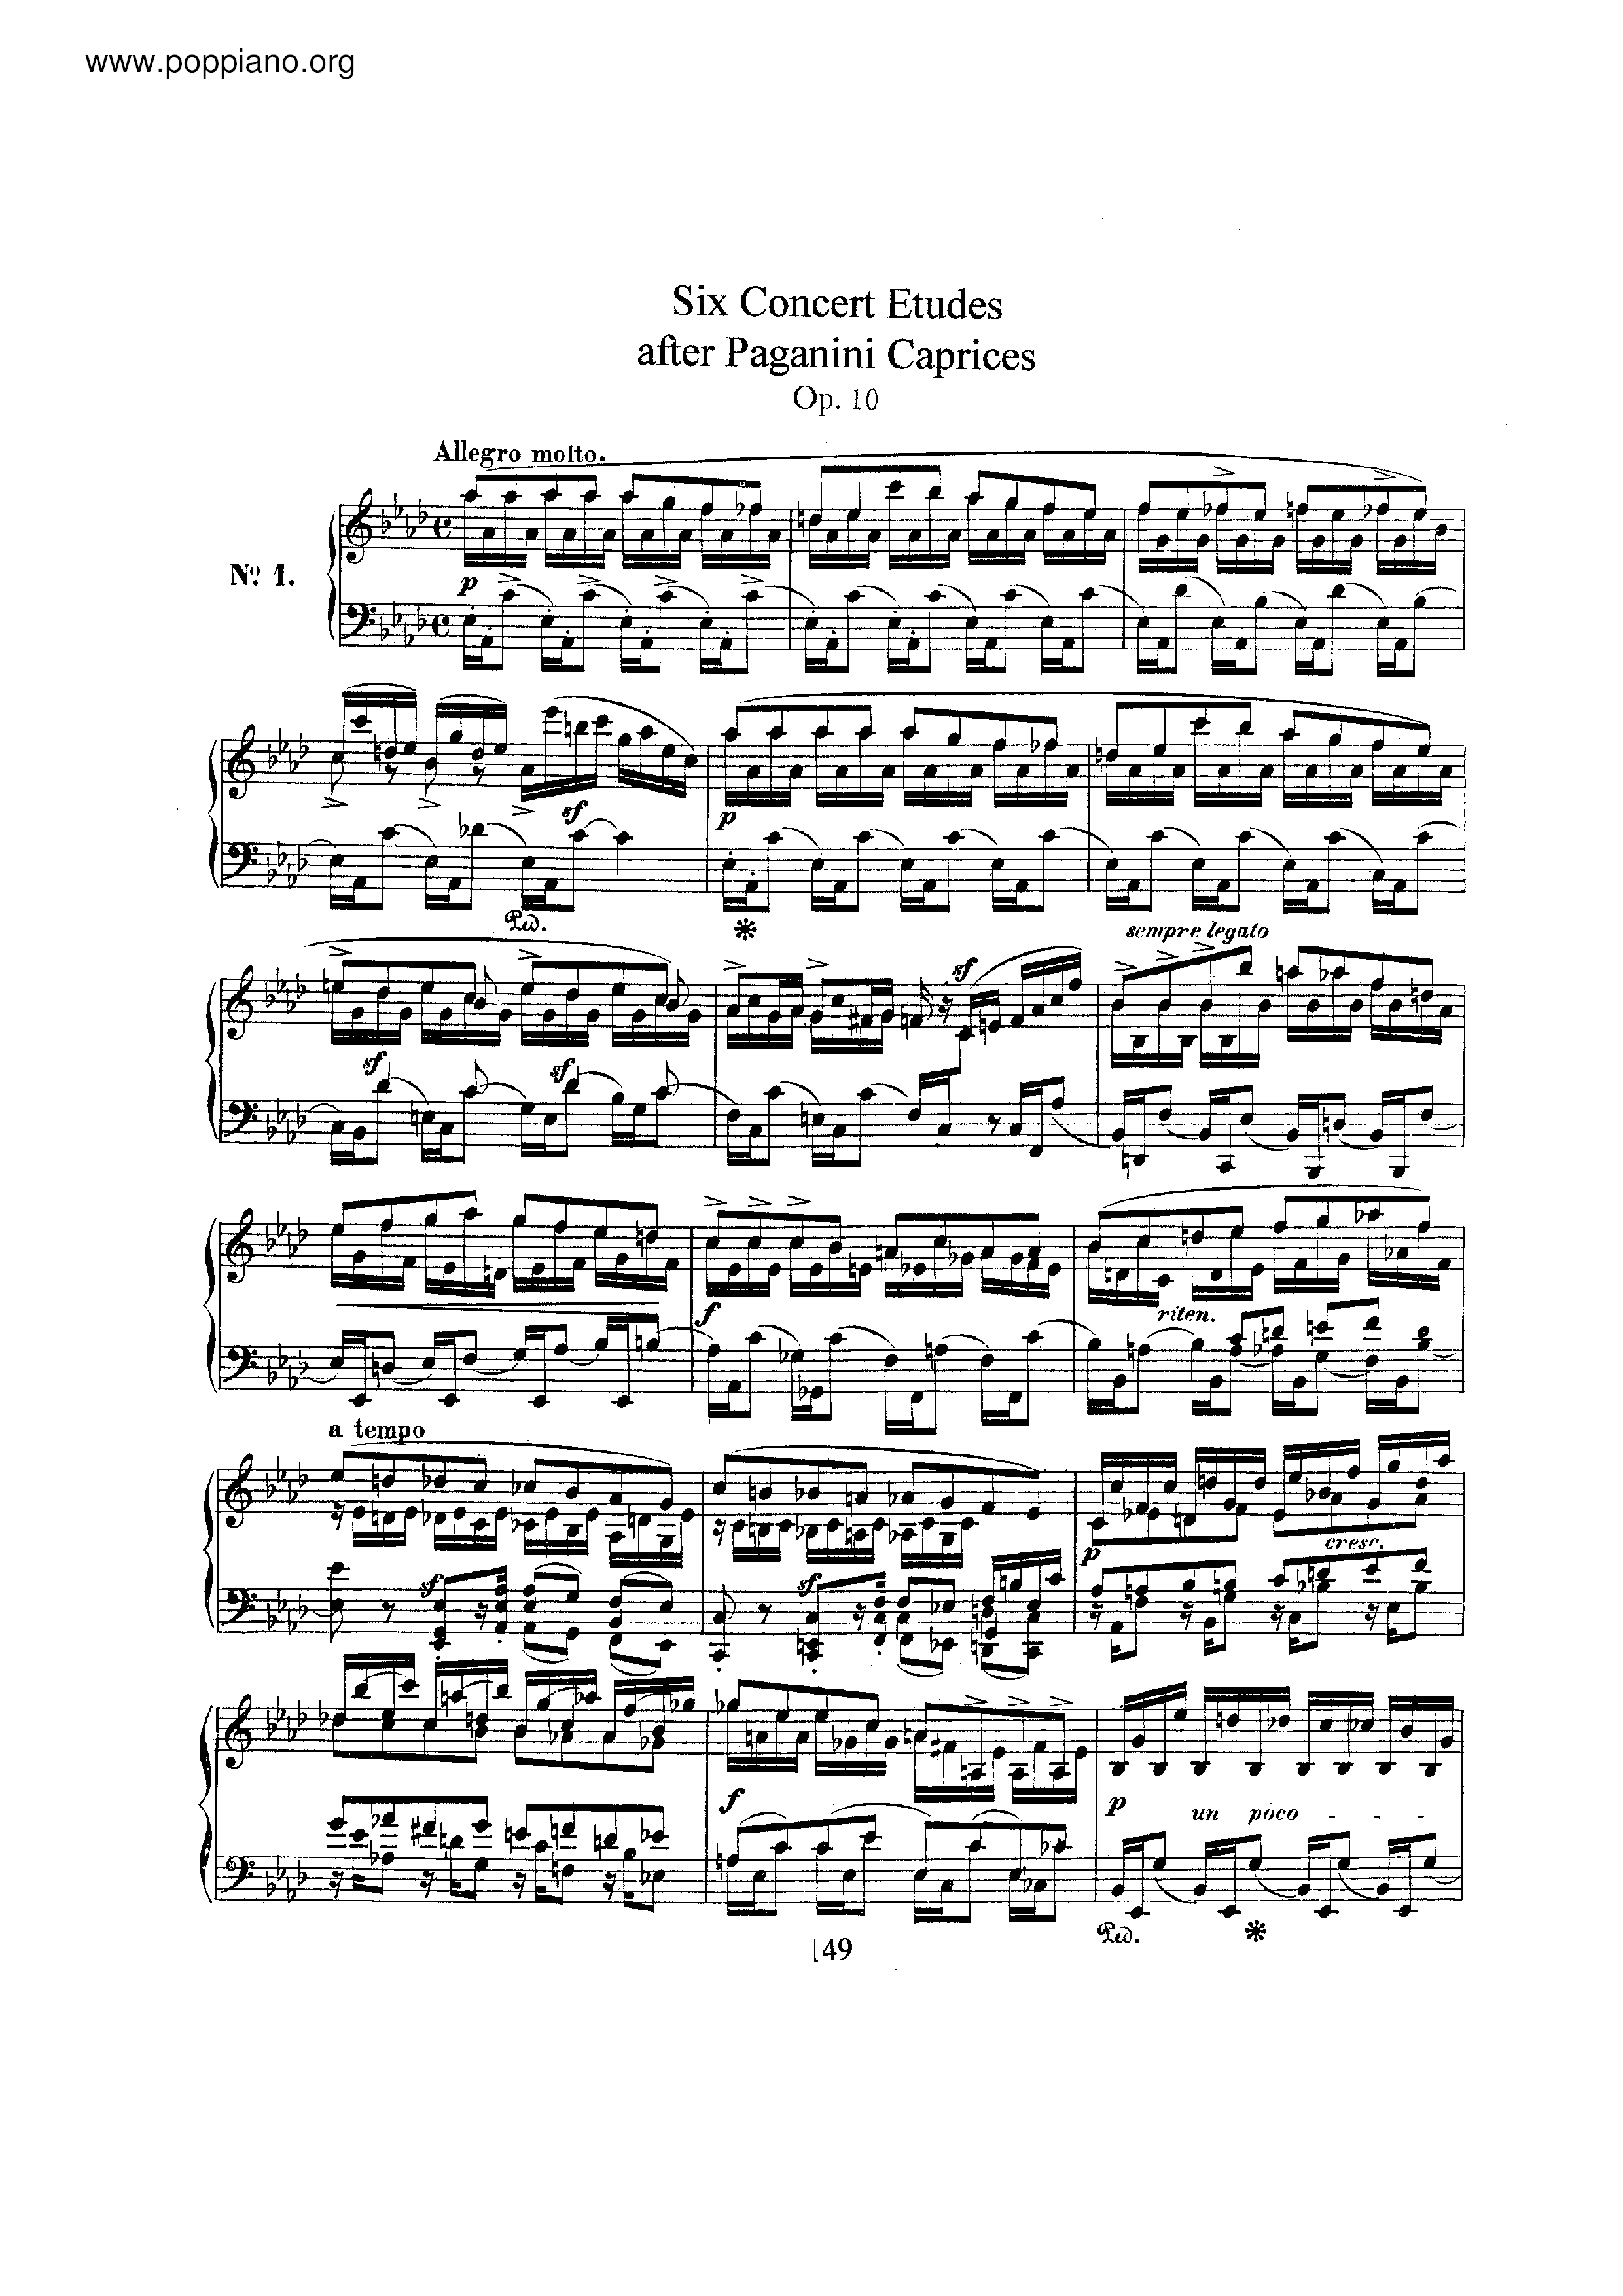 6 Concert Etudes after Paganini Caprices, Op.10琴谱